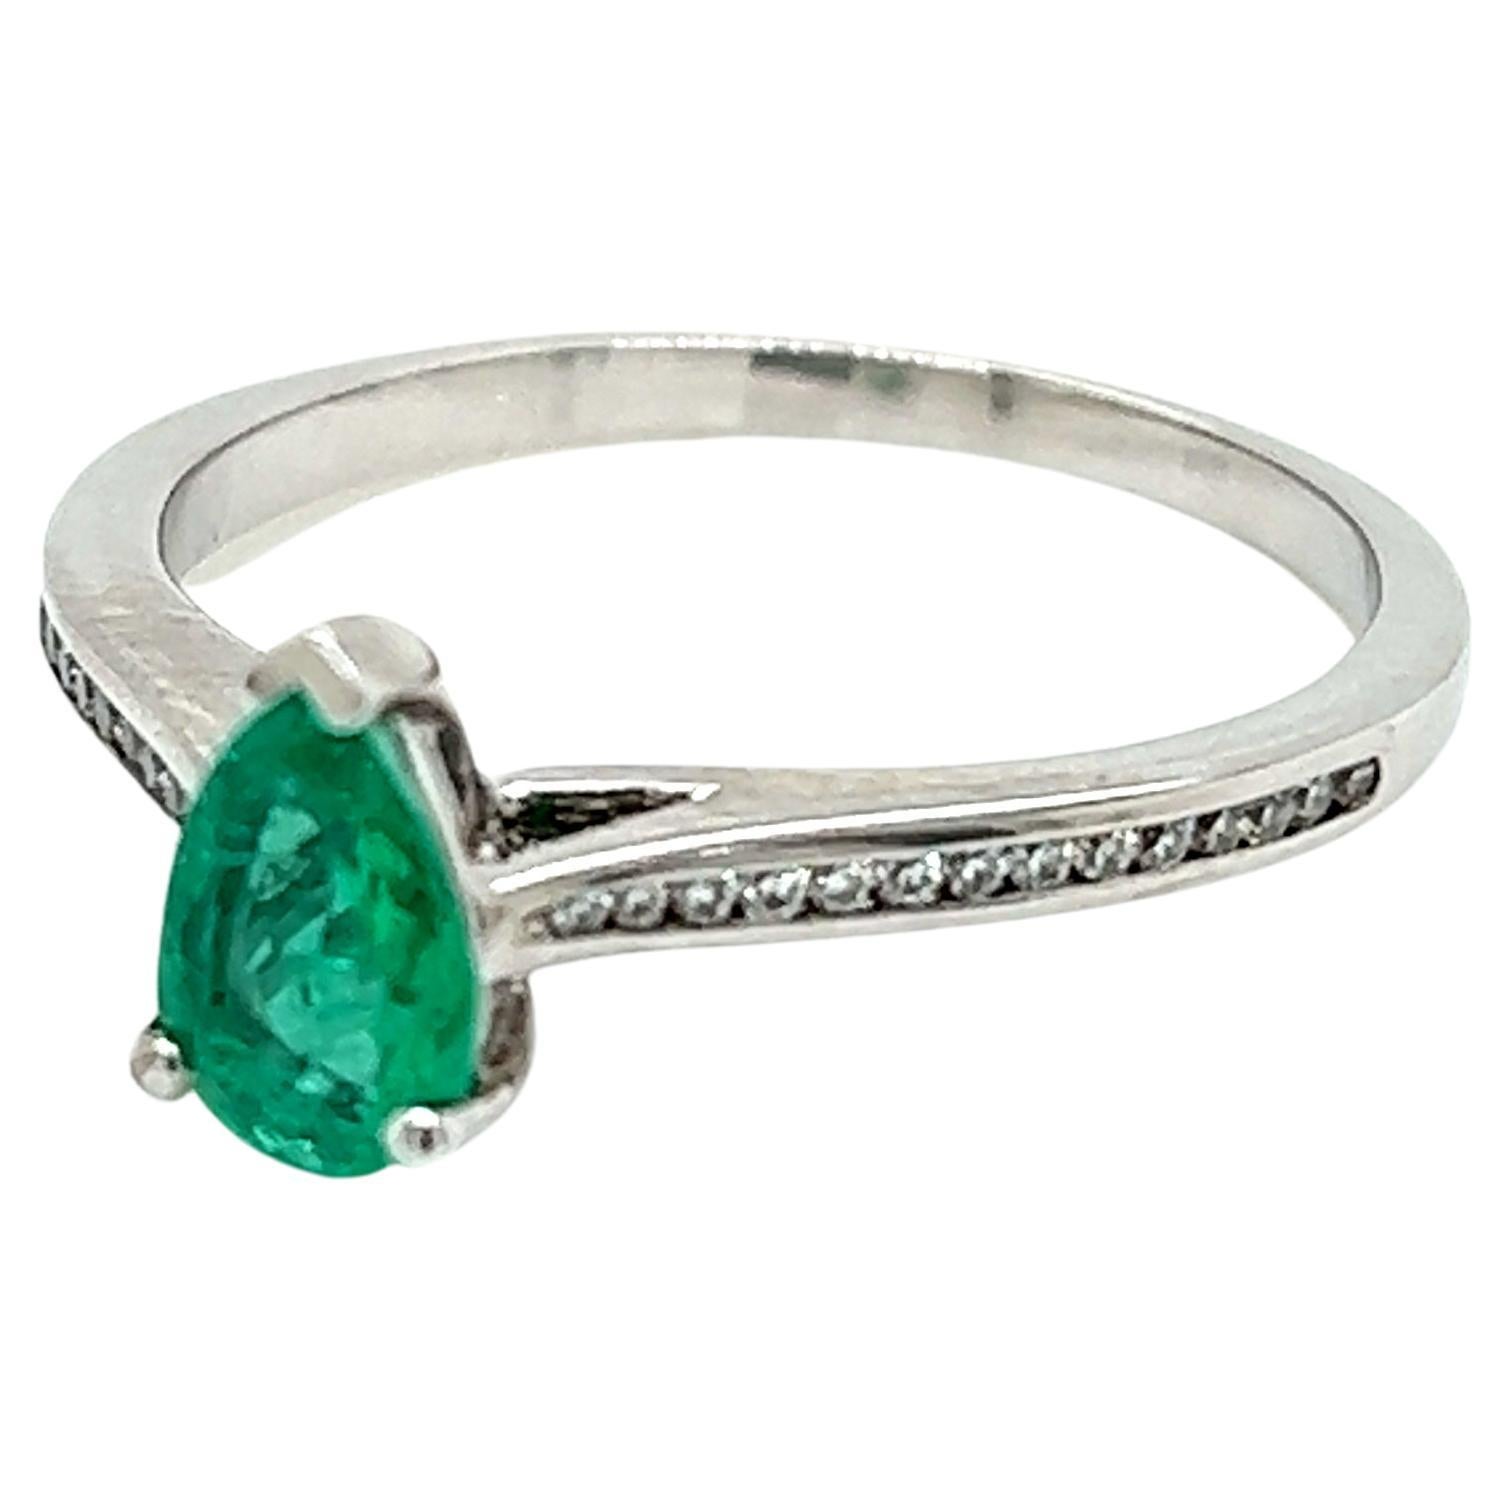 0.45 Carat Pear Shape Emerald and Diamond Ring in 18 Karat White Gold